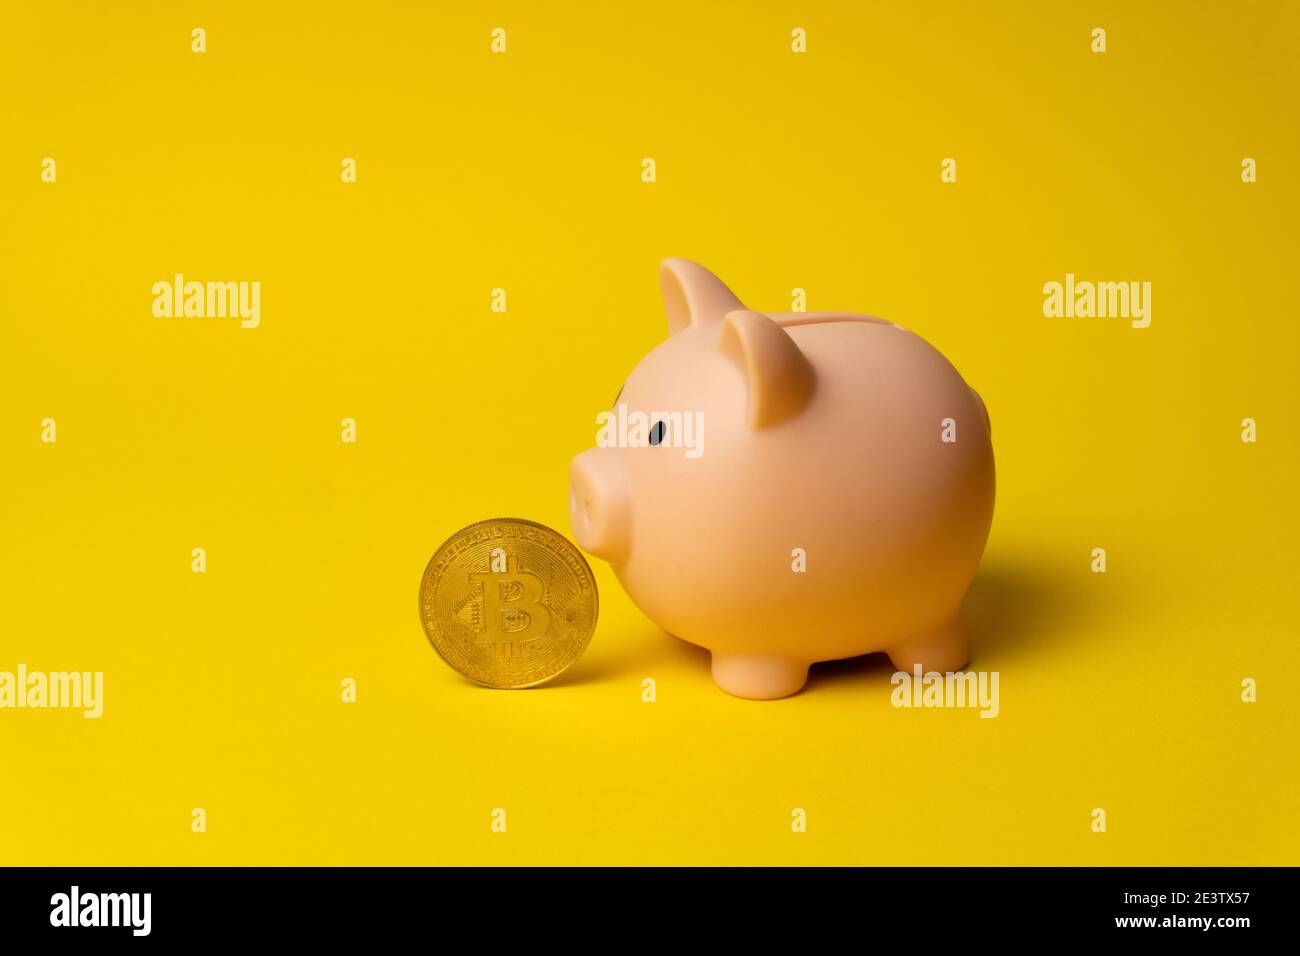 Cryptocurrency Bitcoin near piggy money box as symbol of financial revolution Stock Photo